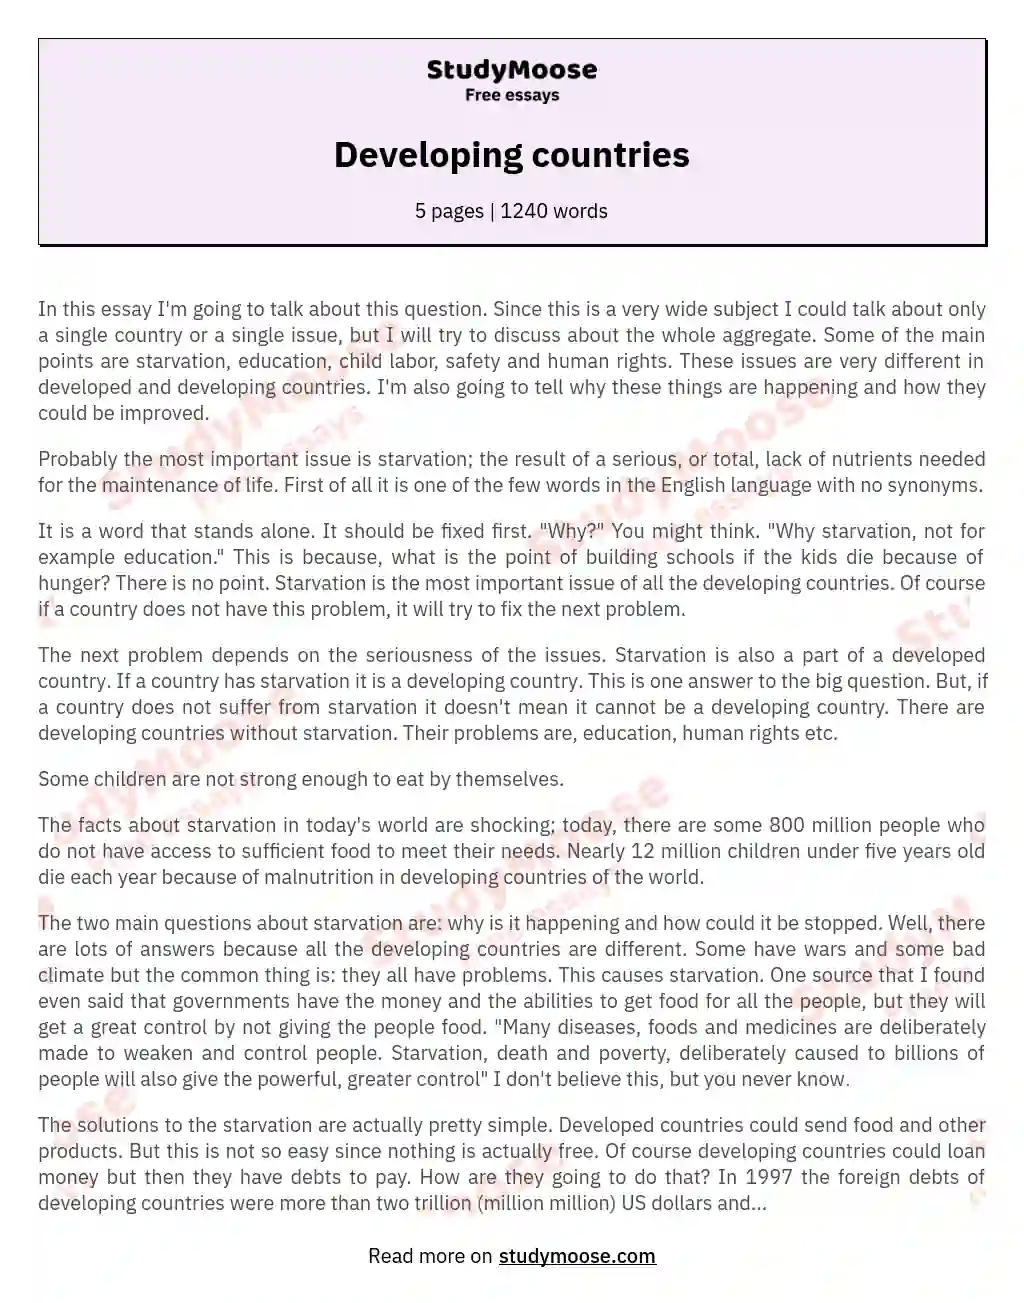 characteristics of developing countries essay grade 11 memo